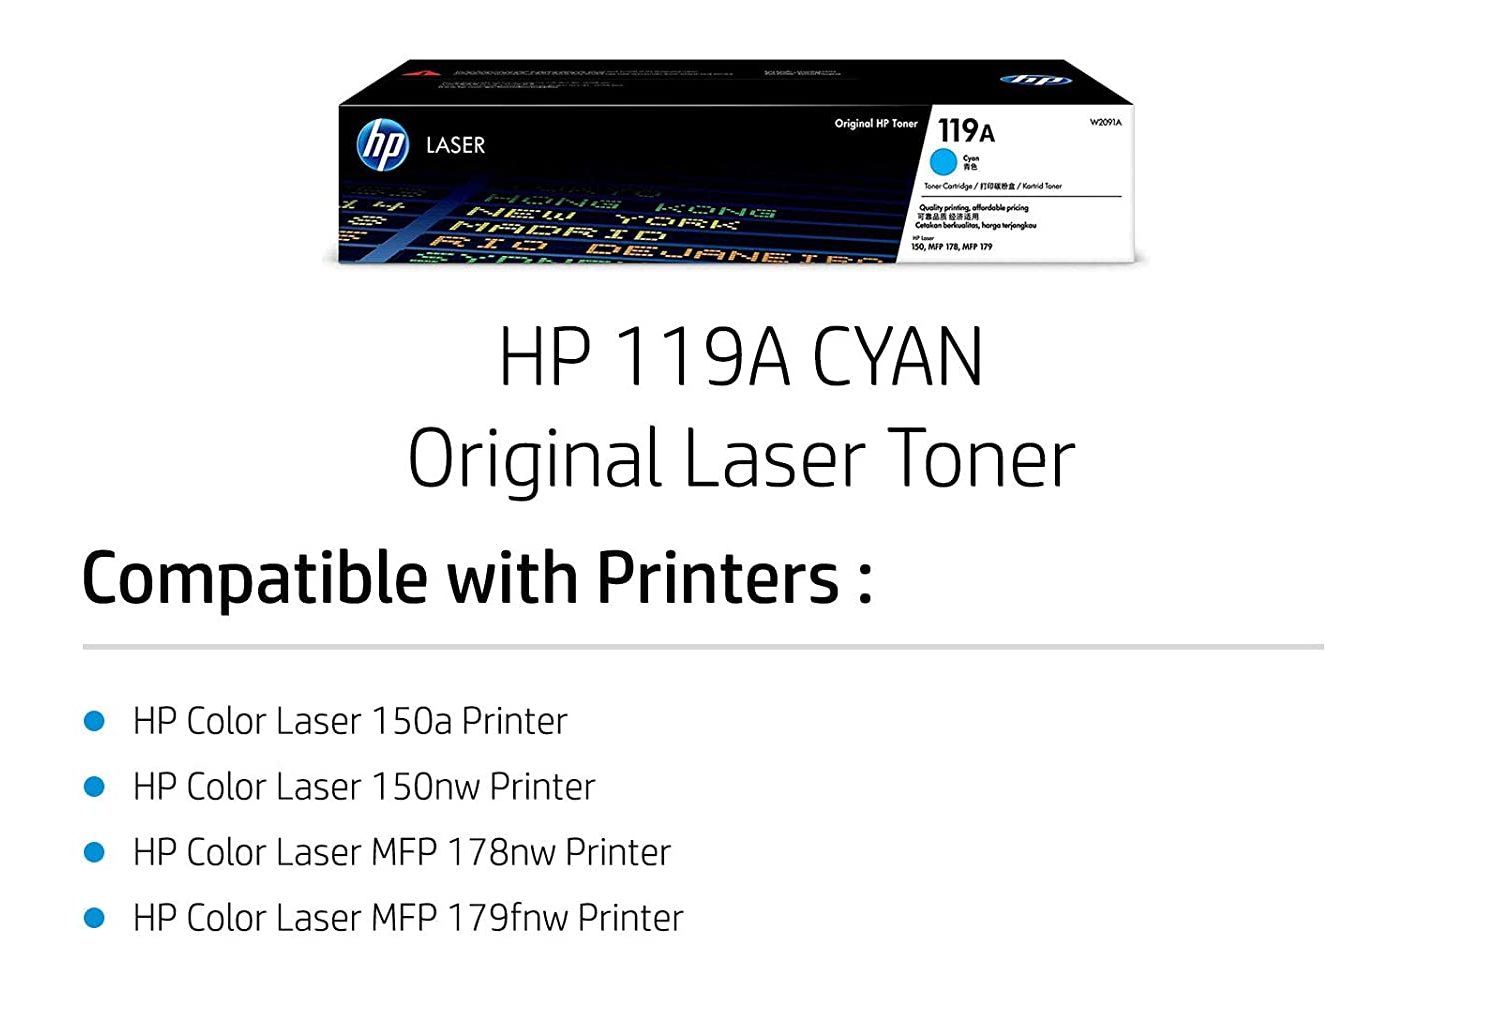 HP 119A Cyan Original Laser Toner Cartridge